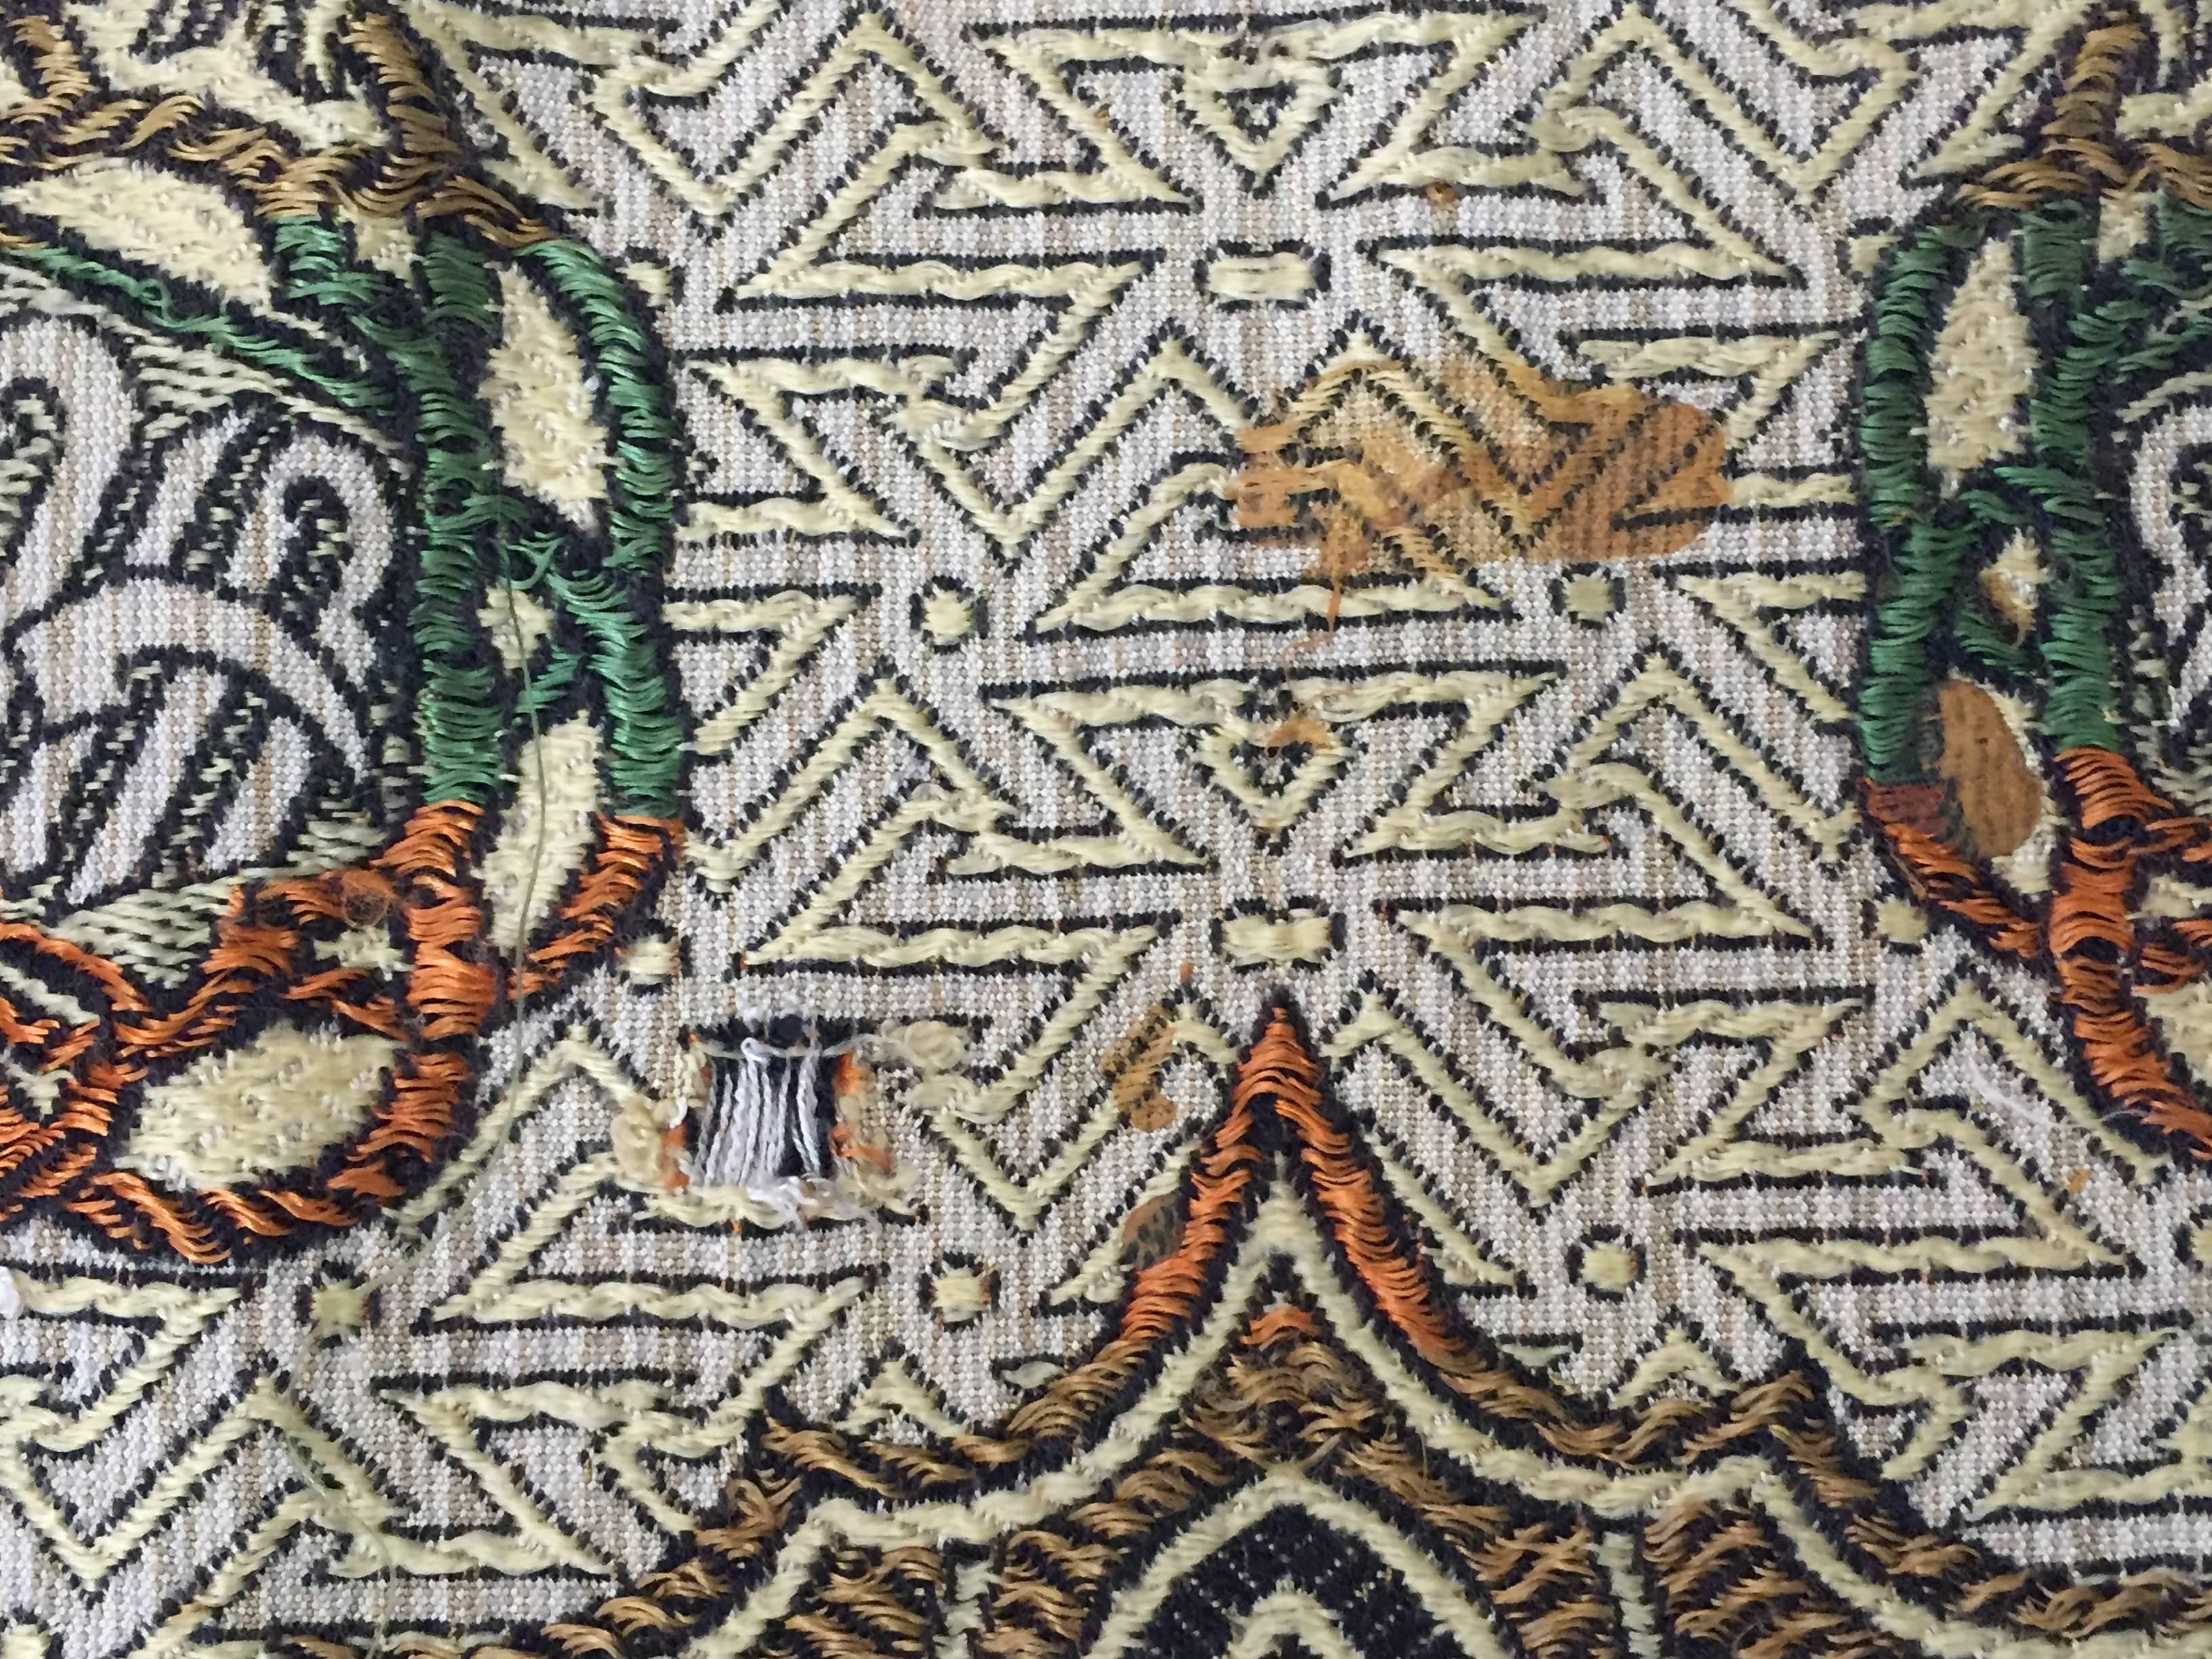 Granada Islamic Spain Textile with Moorish Calligraphy Writing 2